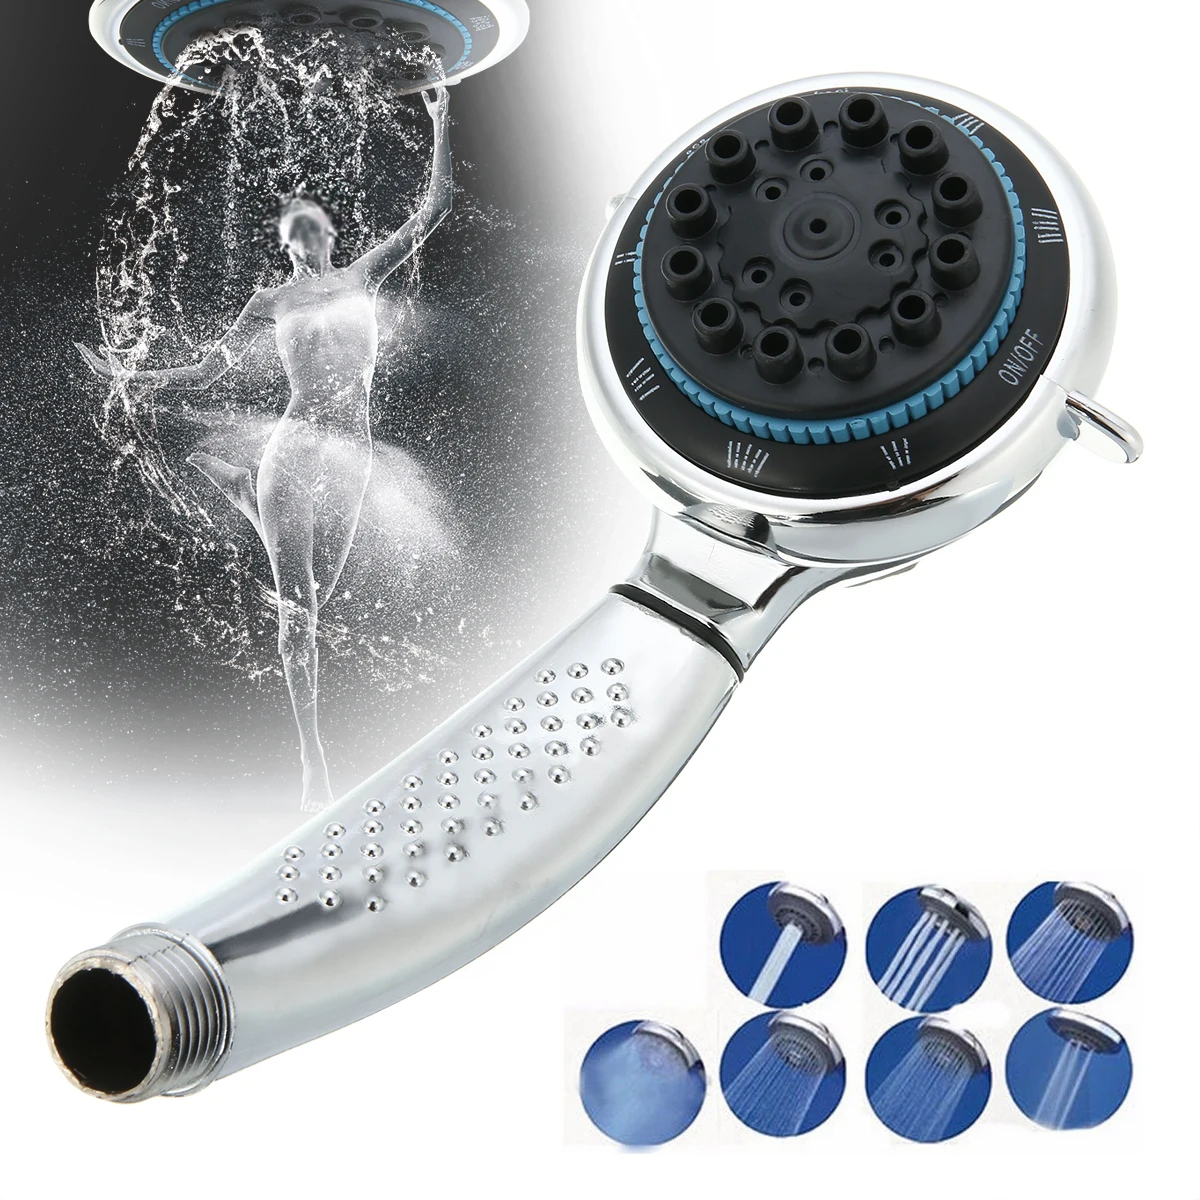 5-Spray Modes Function Bathroom Handheld Bath Shower Head Handset Water Saving 